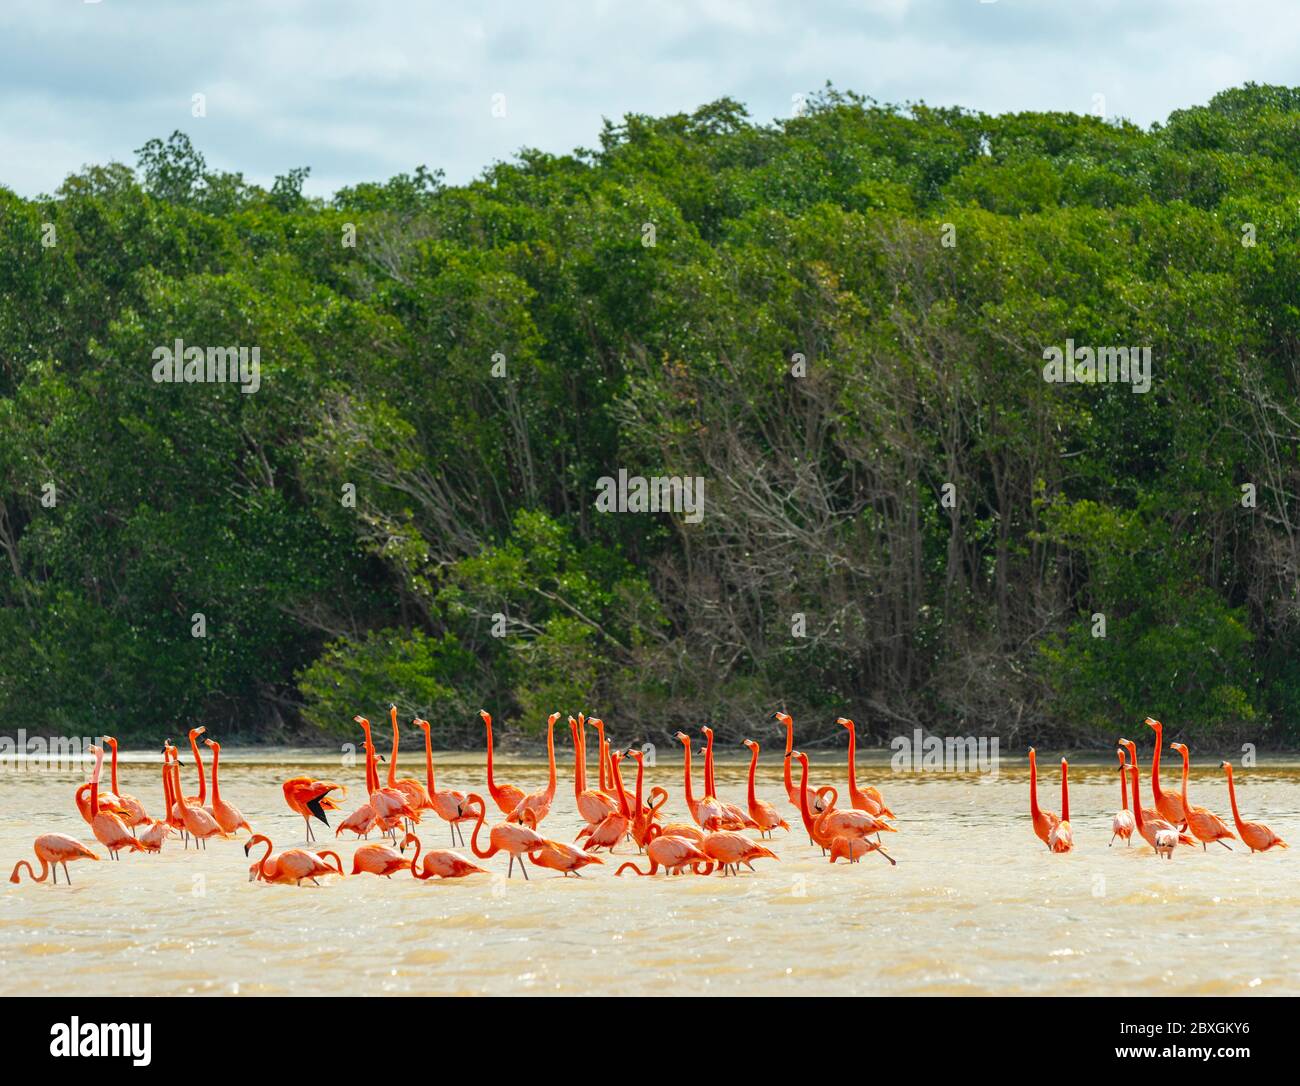 A flock of American Flamingo (Phoenicopterus ruber) in a mangrove forest, Celestun Biosphere Reserve, Yucatan Peninsula, Mexico. Stock Photo